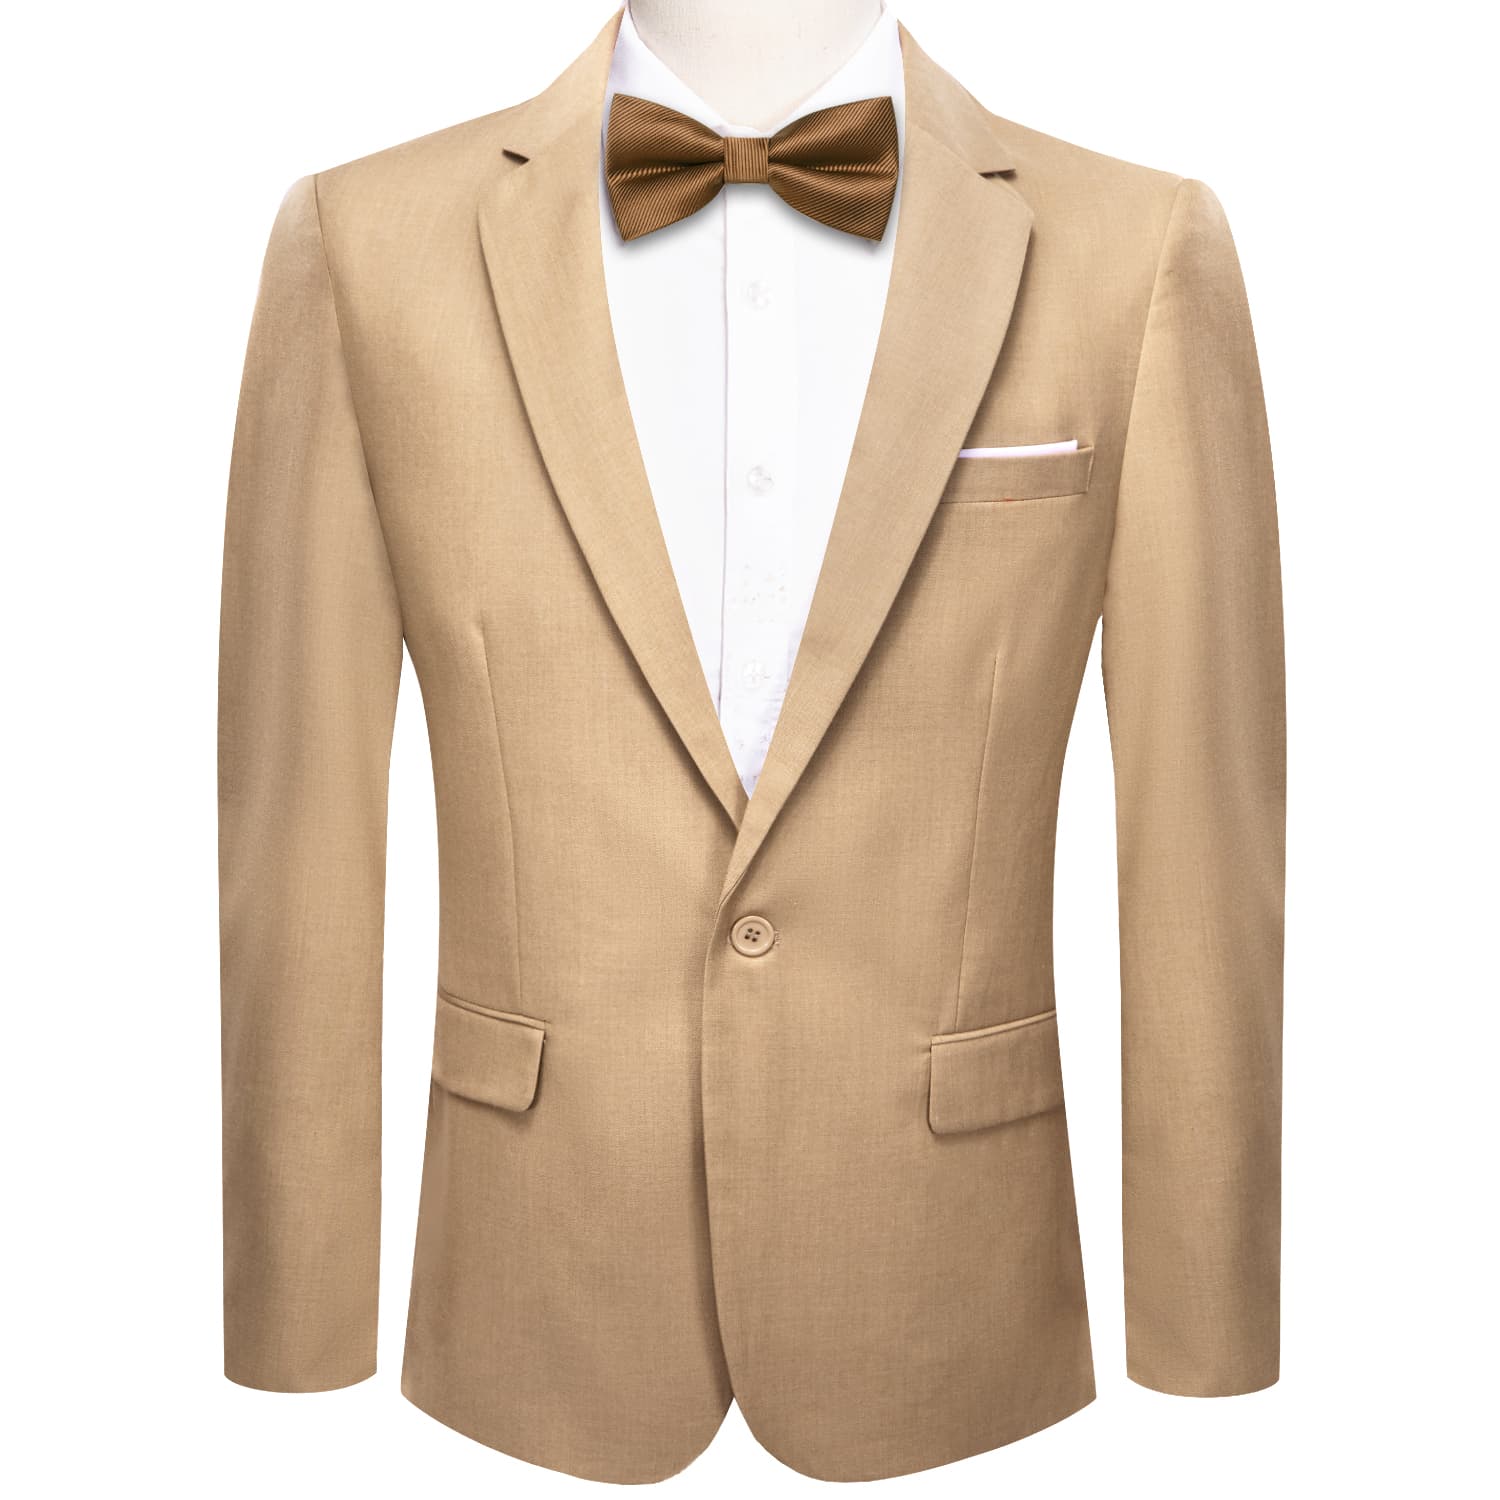  Blazer BrulyWood Brown Men's Wedding Business Solid Top Men Suit